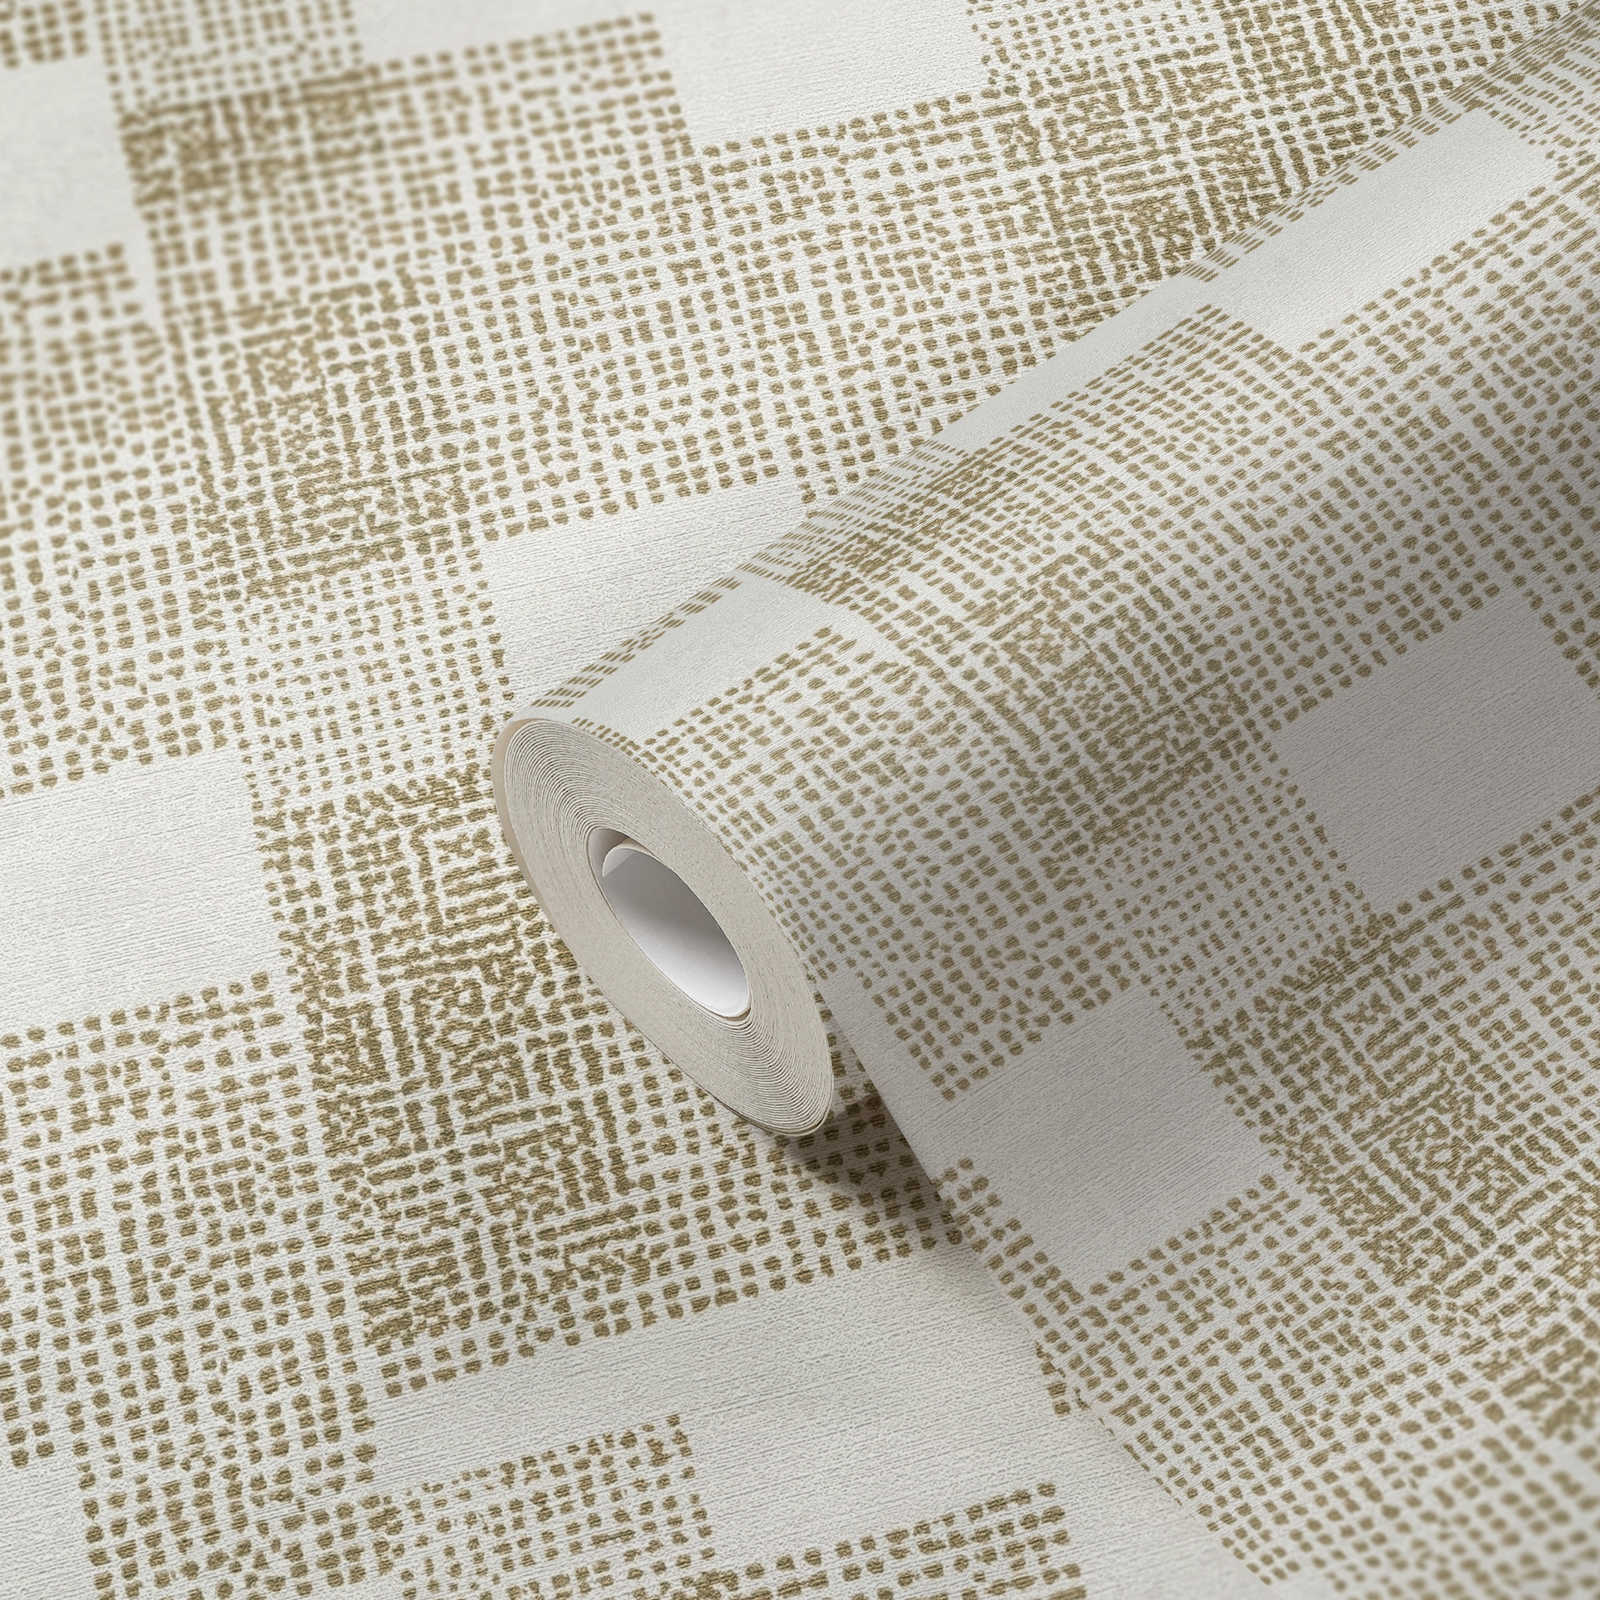             Non-woven wallpaper geometric ethnic design - cream, metallic
        